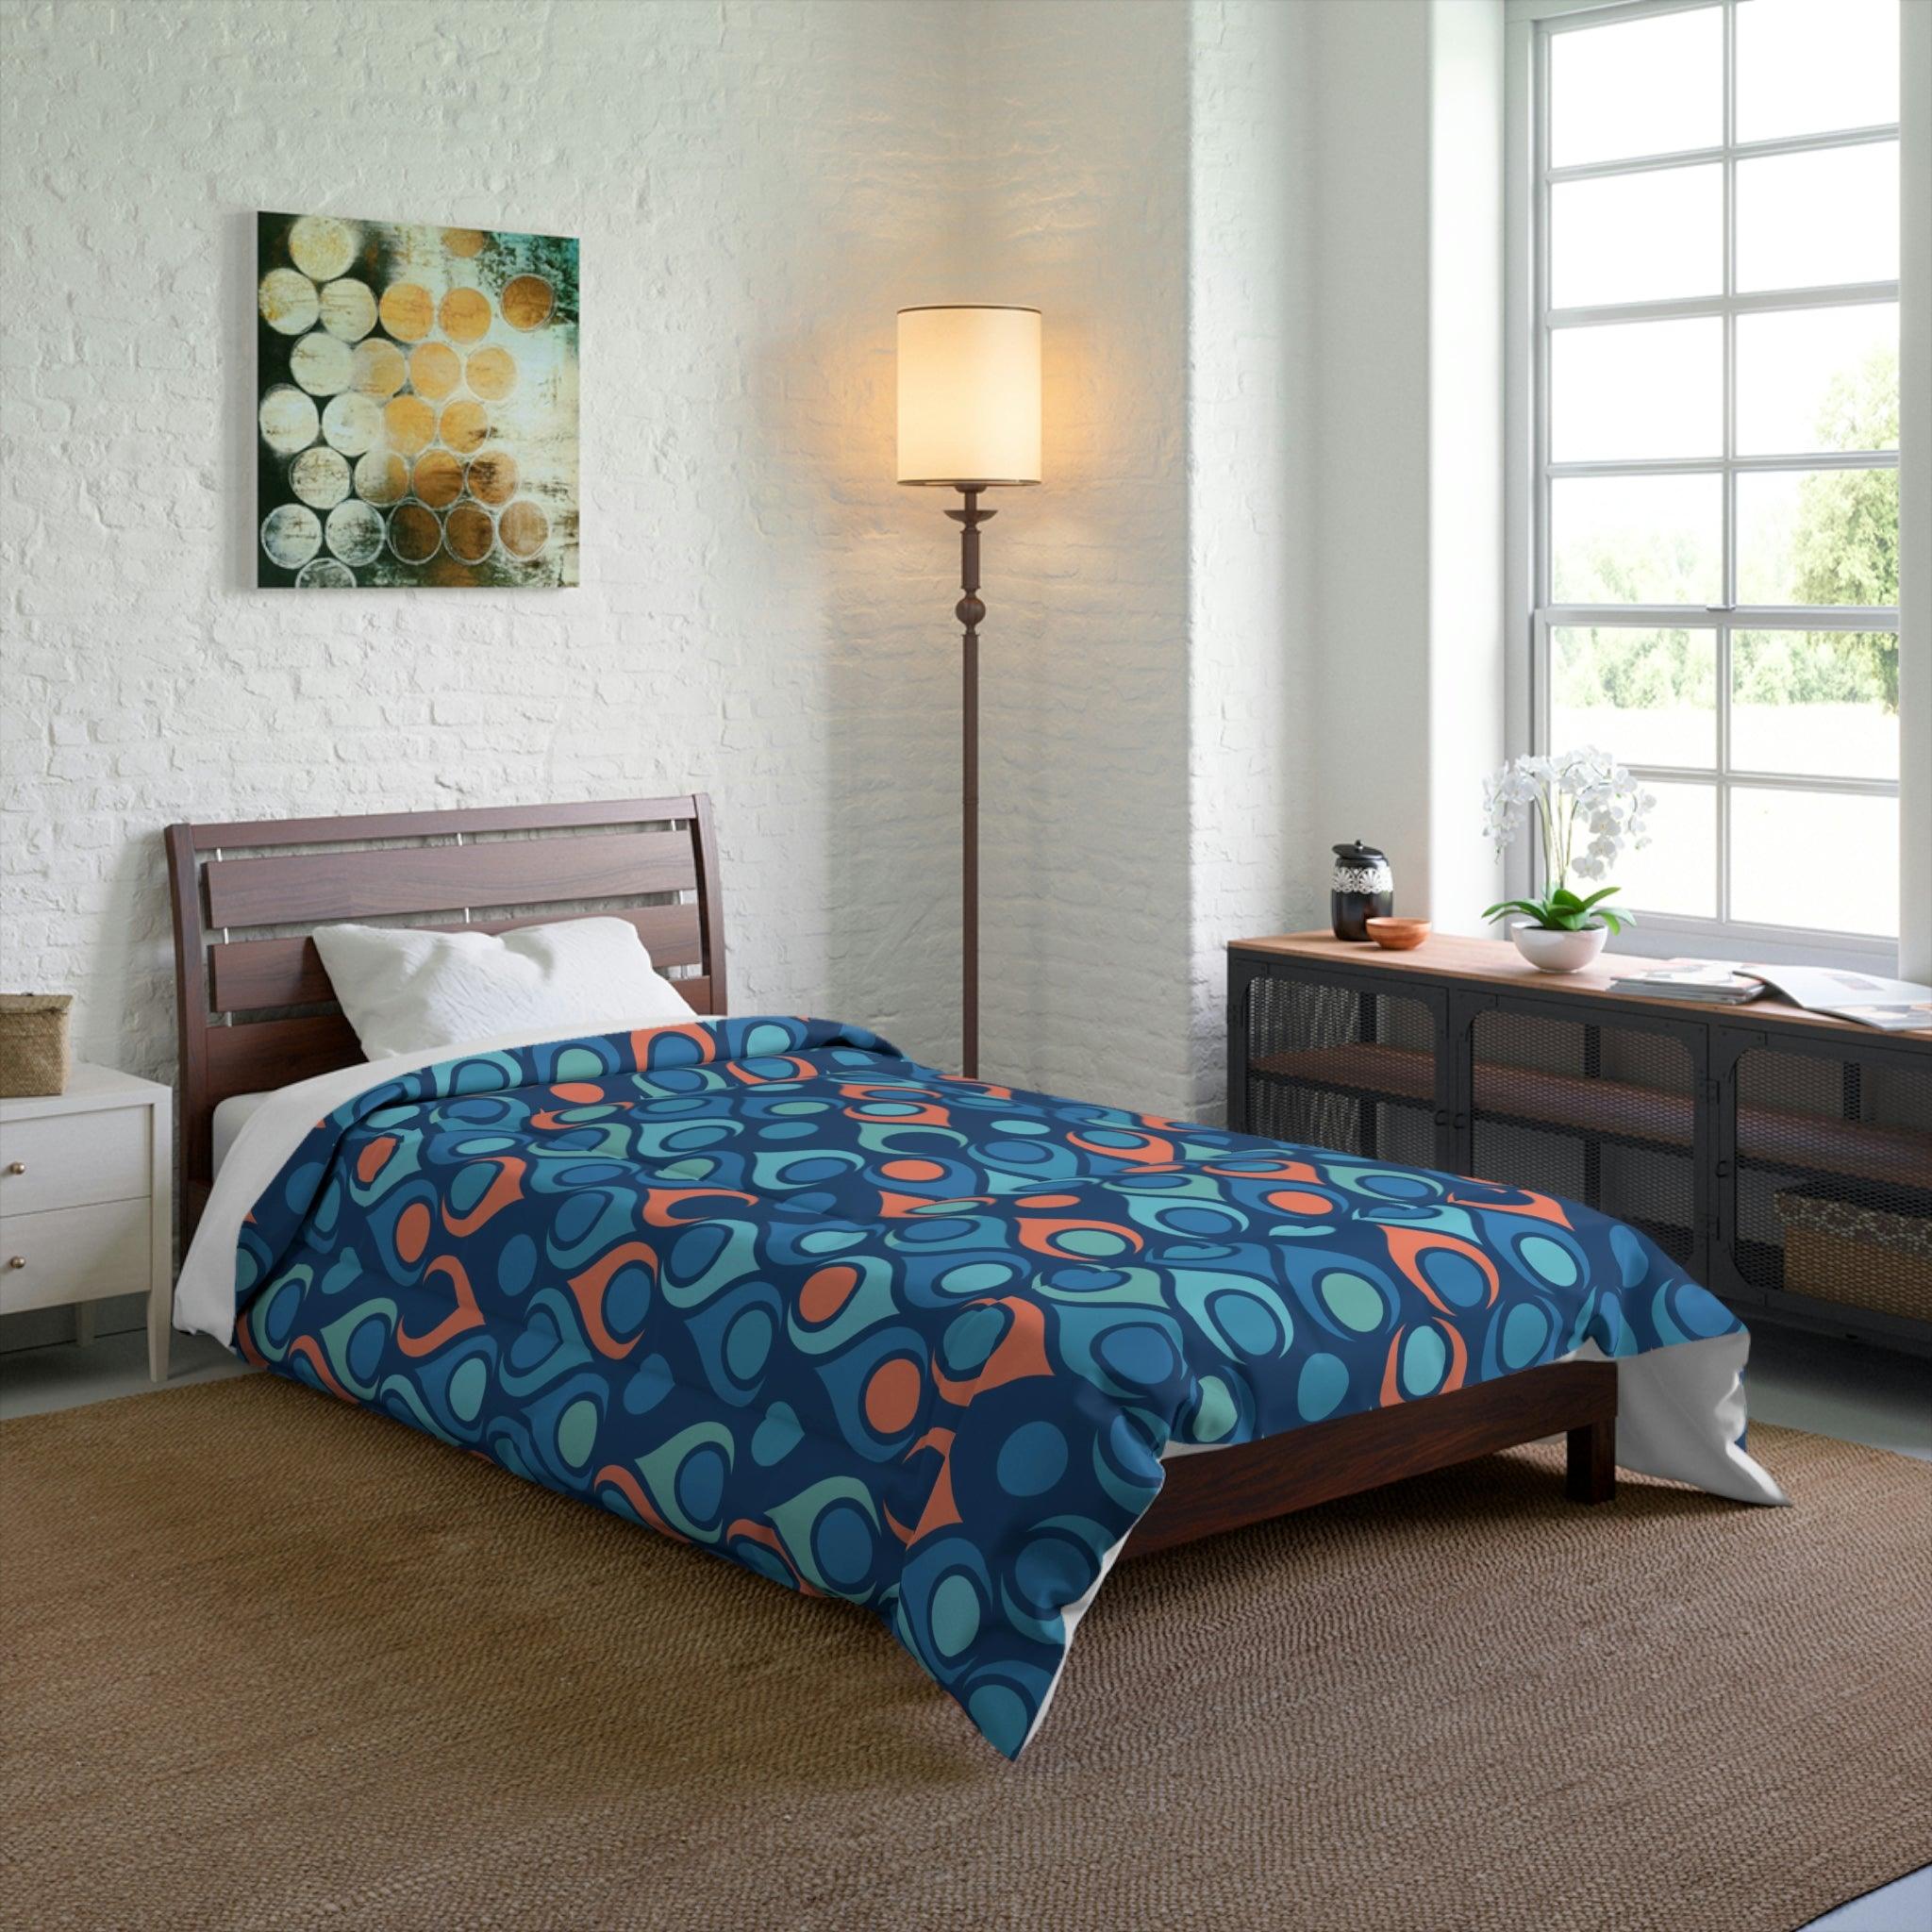 Retro Mid Century Mod Geometric Blue & Coral Orange Comforter | lovevisionkarma.com